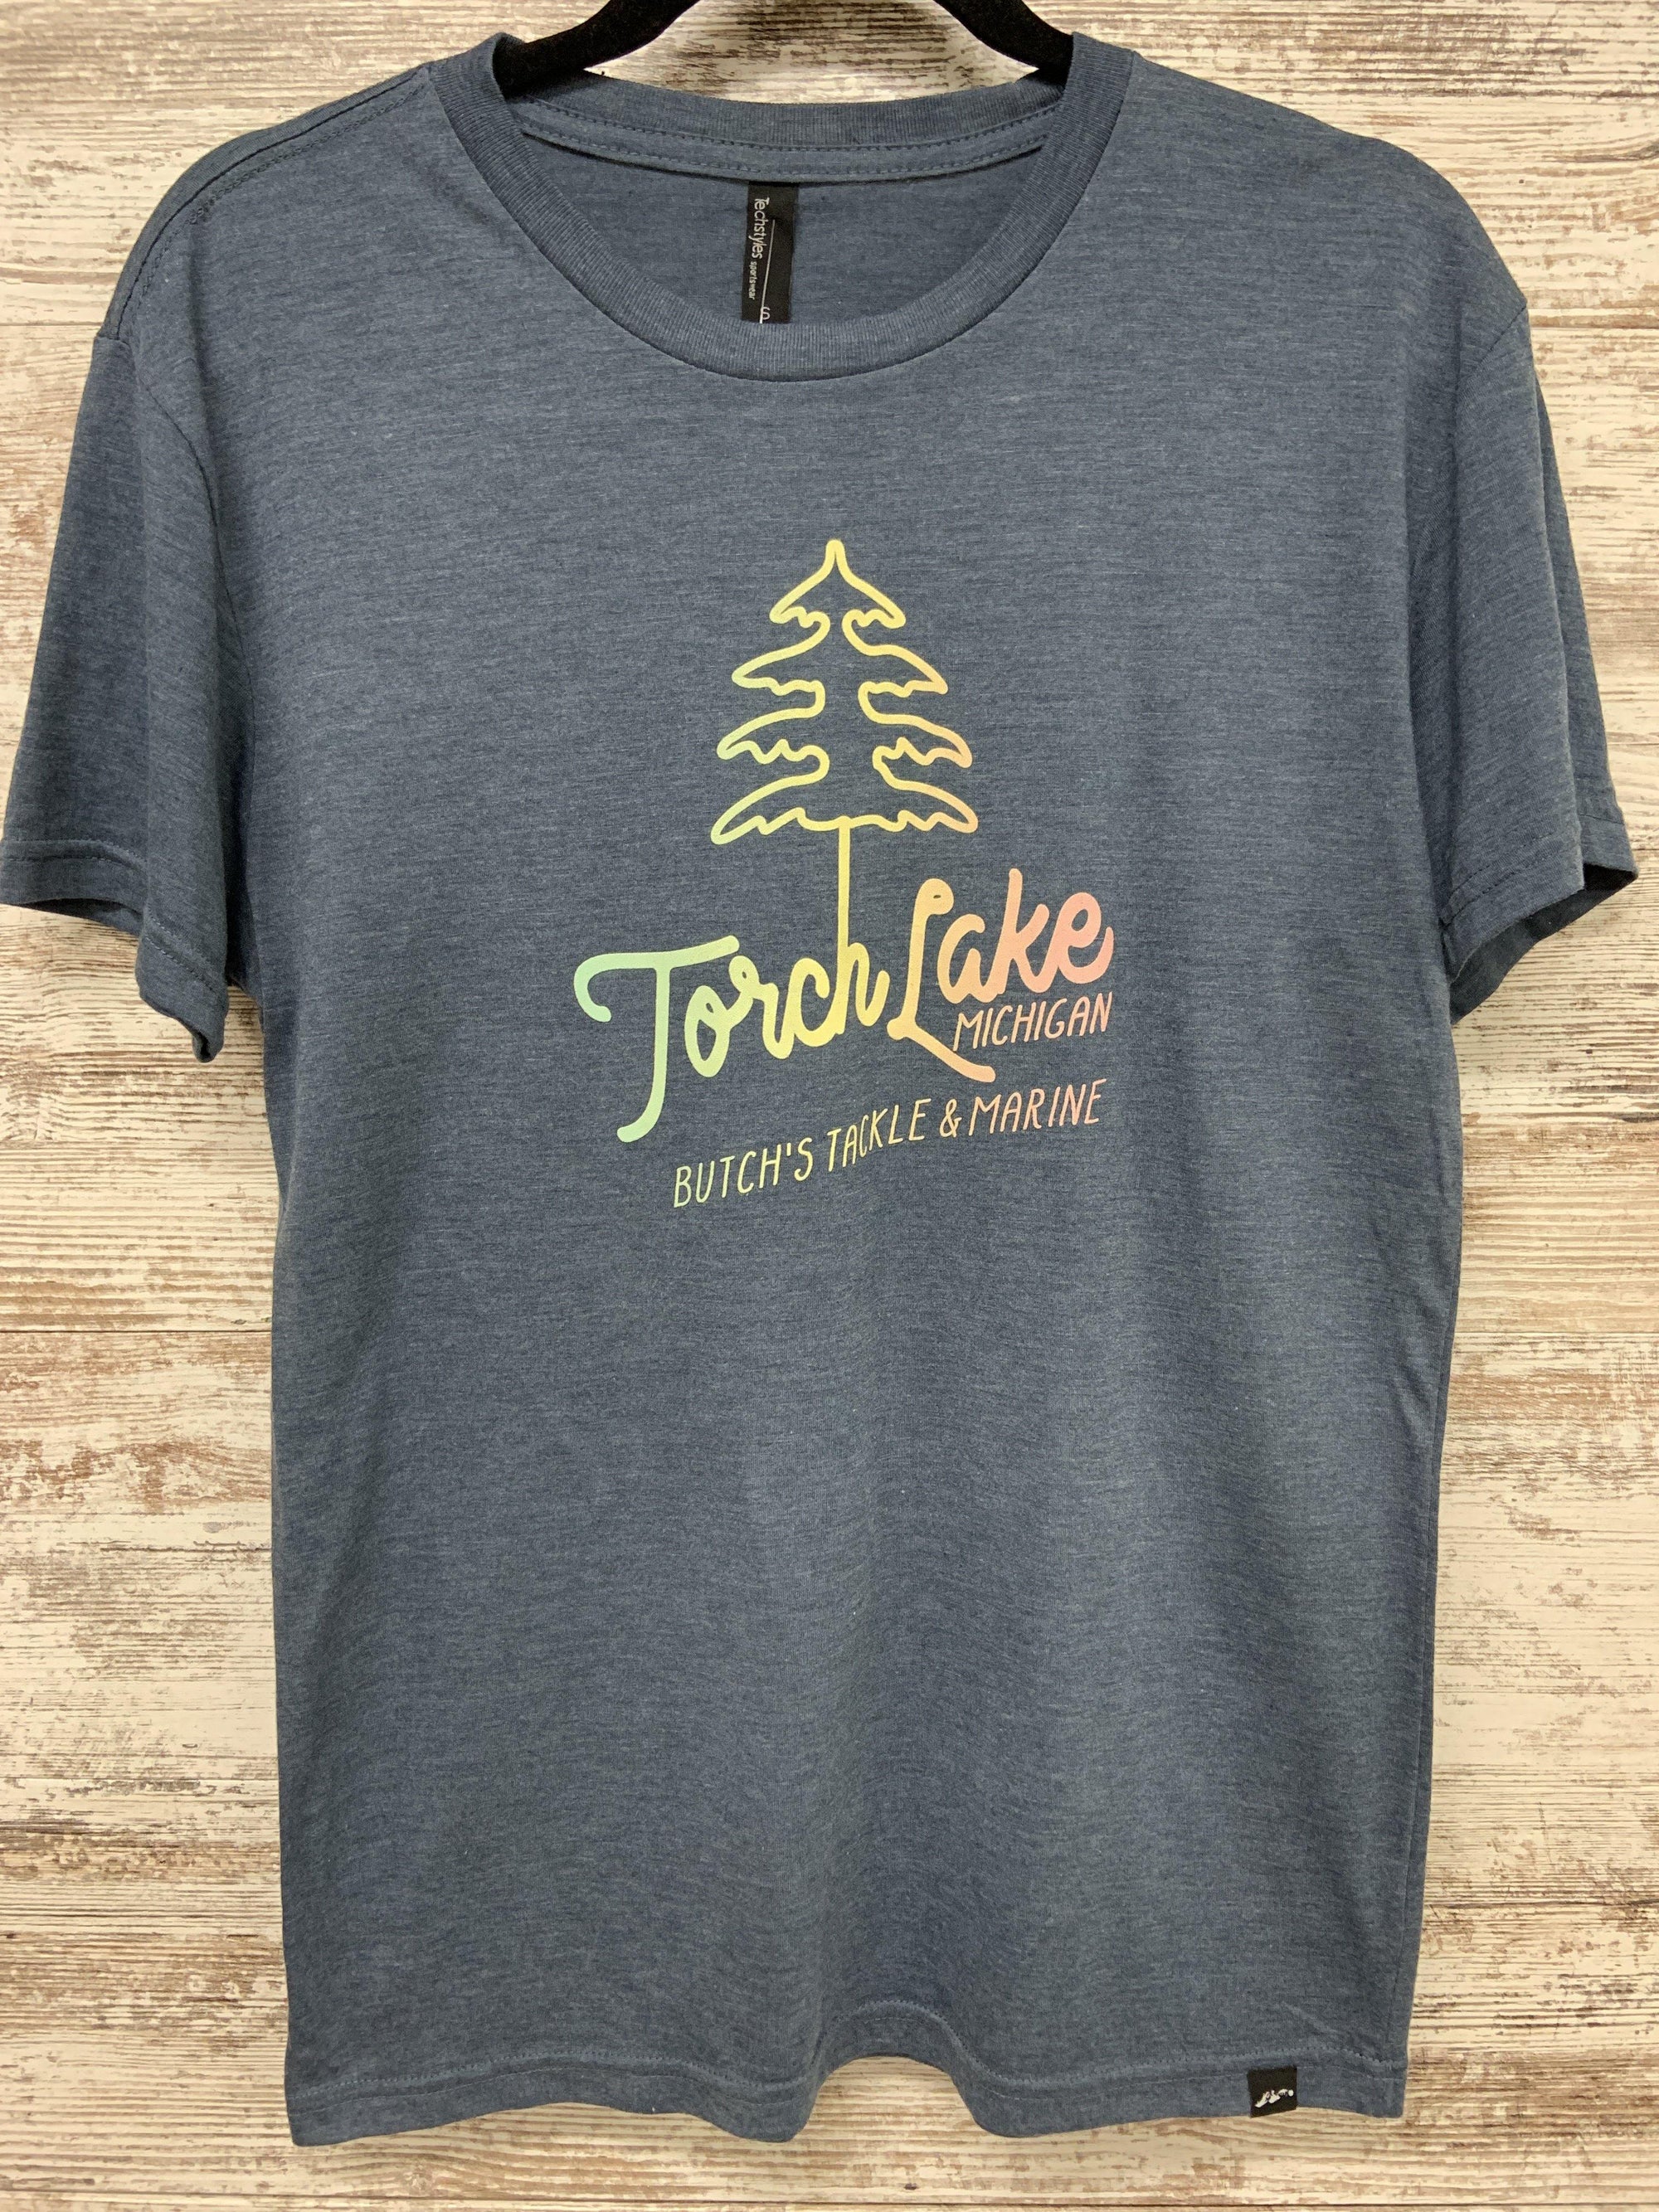 Pastel Pine Tshirt - Butch's Tackle & Marine - Pontoon Rentals on Torch Lake